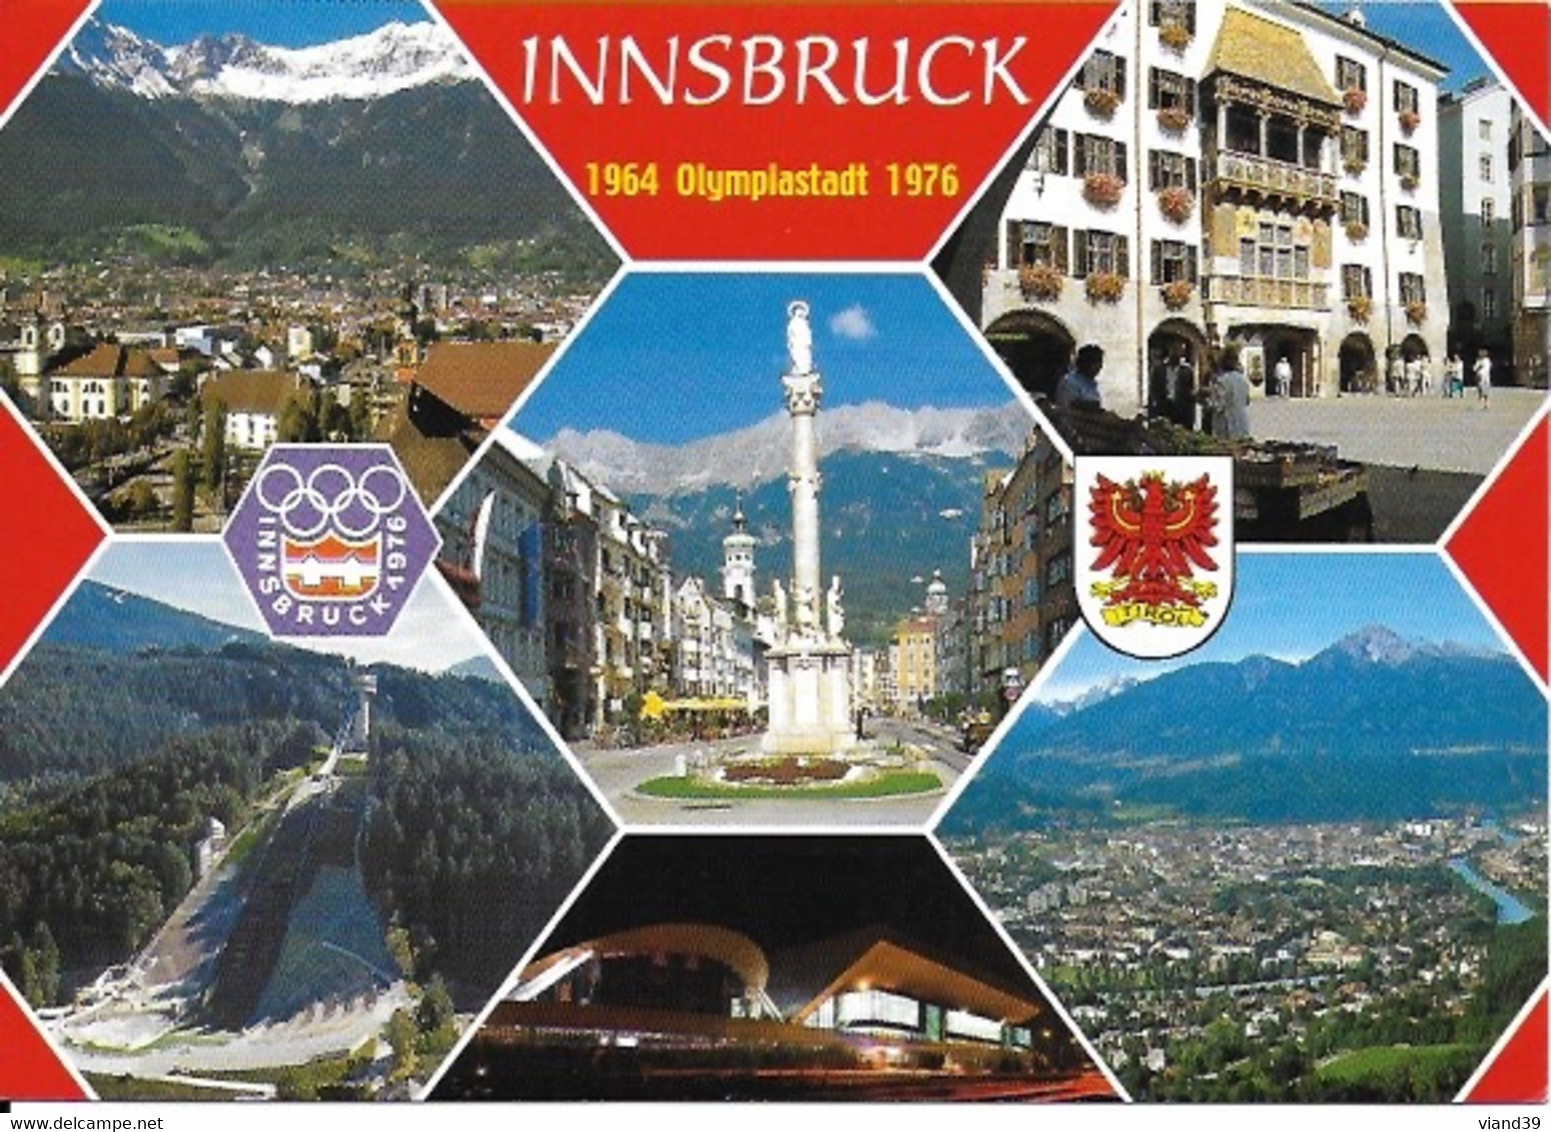 Innsbruck. -  Ville D'Europe Et Des Sports -  Ville Olympique 1964 Et 1976. -  Non écrite - Innsbruck